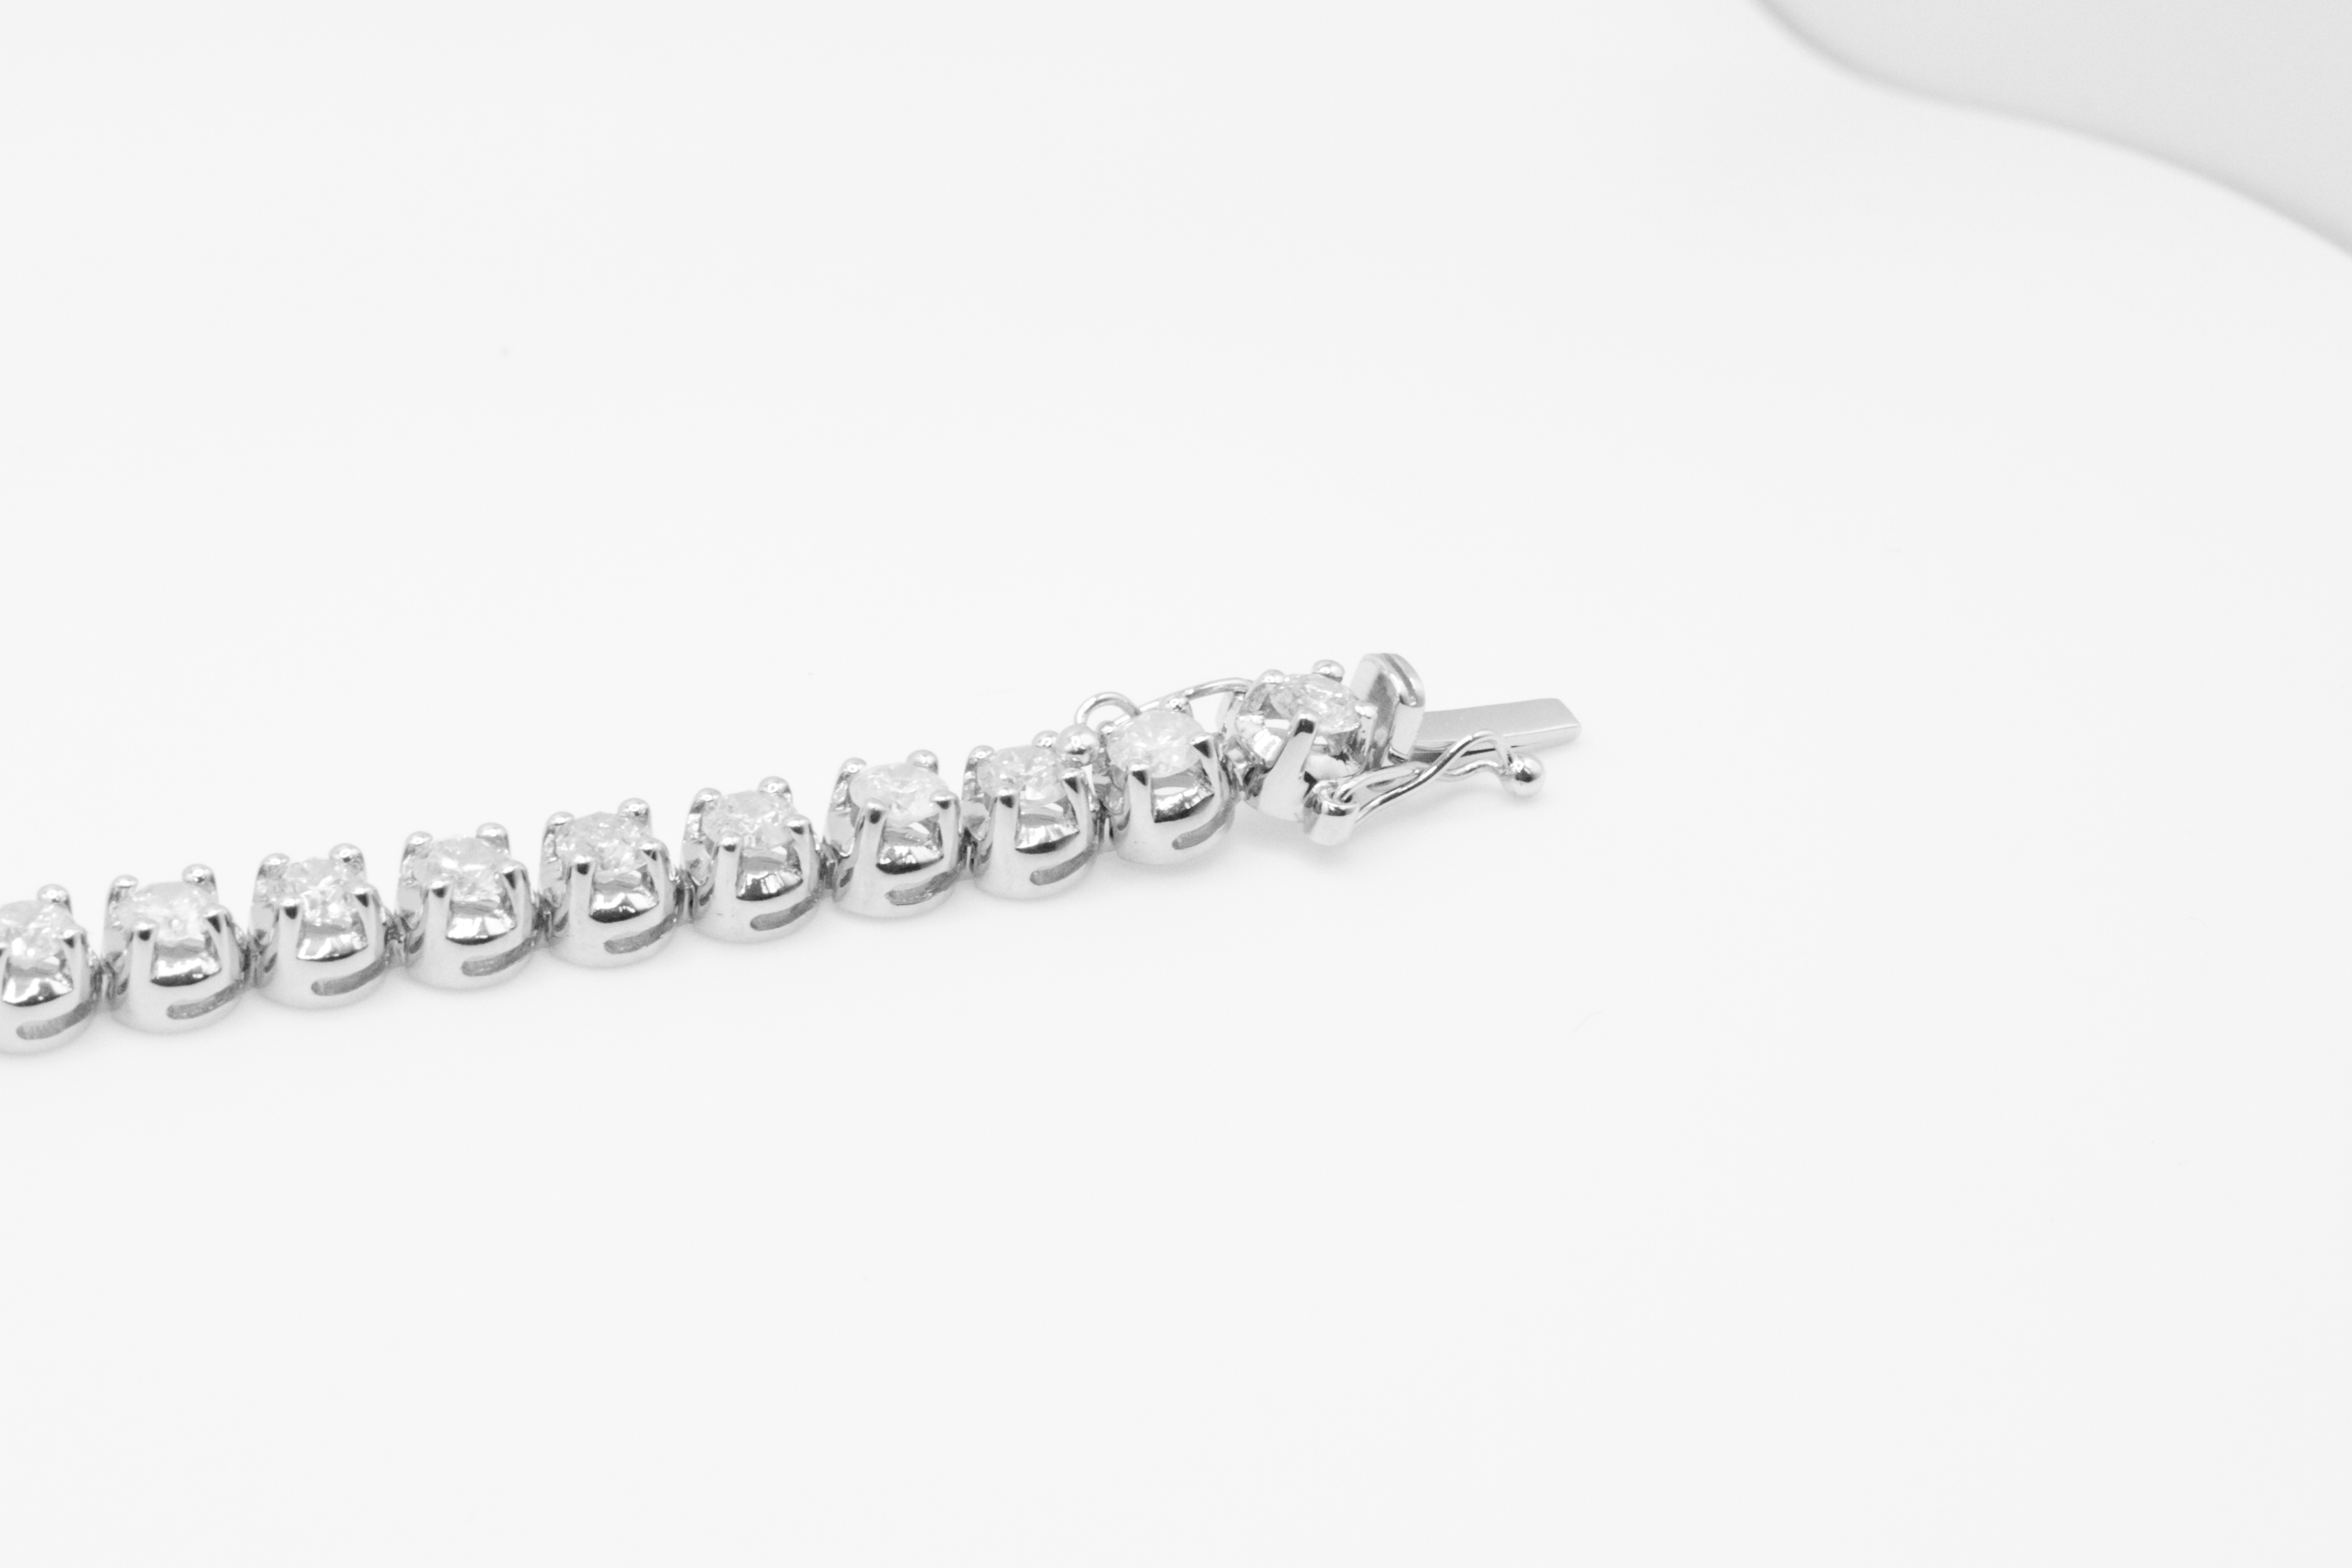 7.0 Carat 18ct White Gold Tennis Bracelet set with Round Brilliant Cut Natural Diamonds - Image 12 of 16